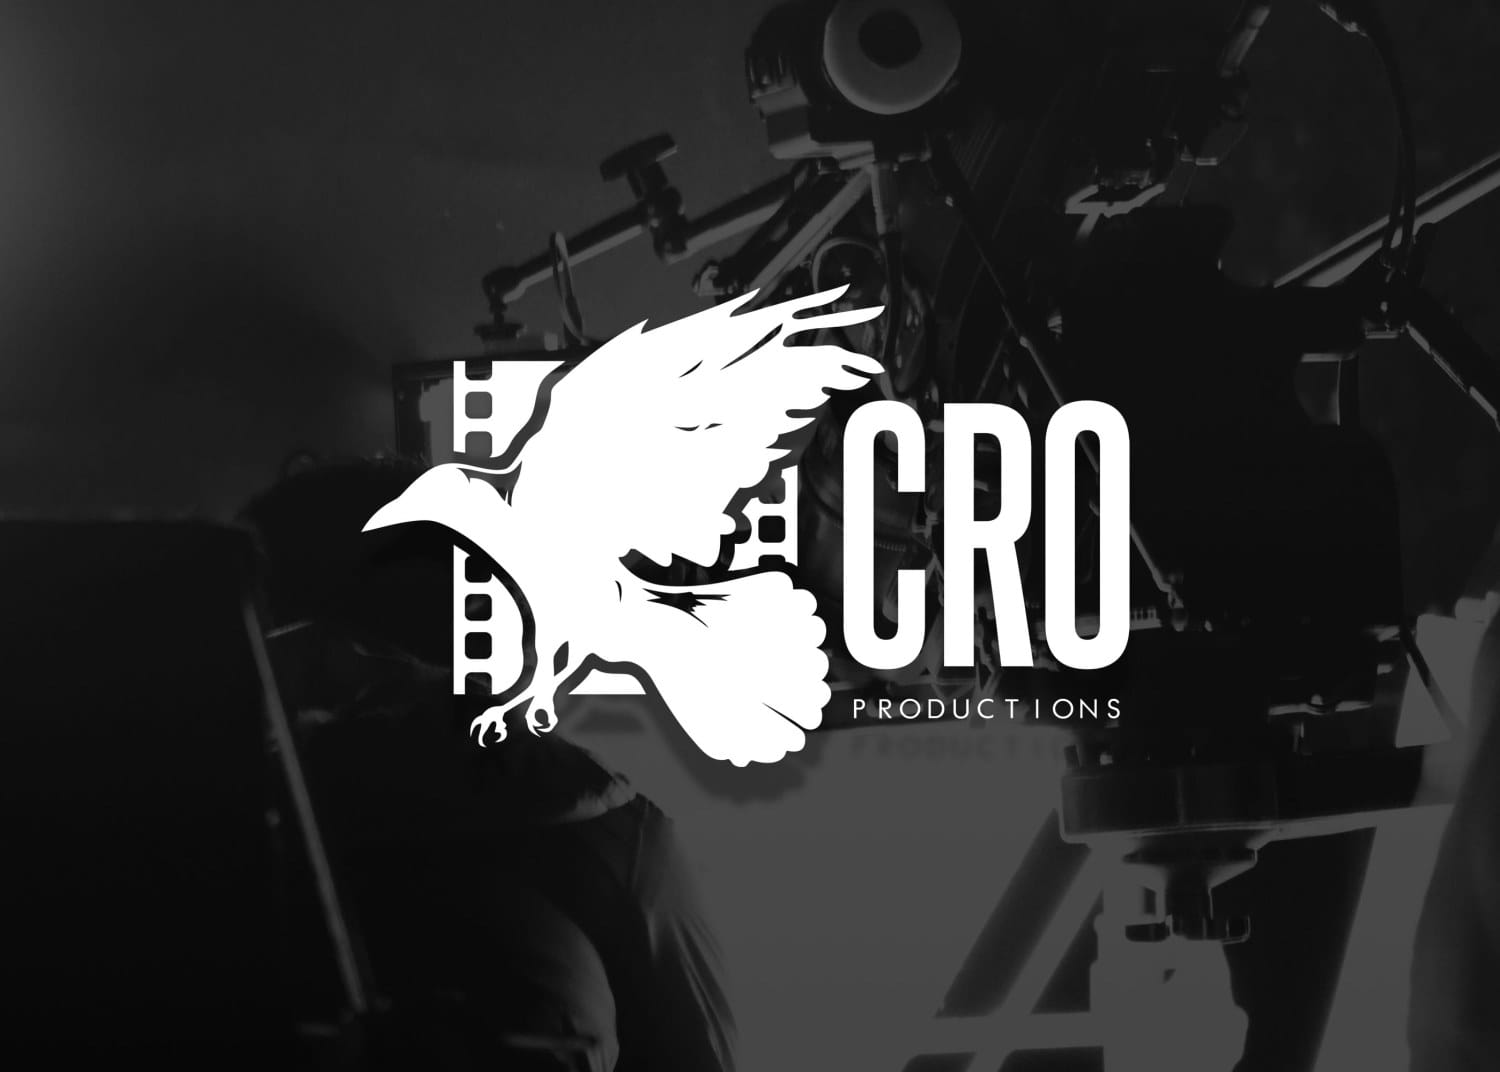 CRO Productions Logo